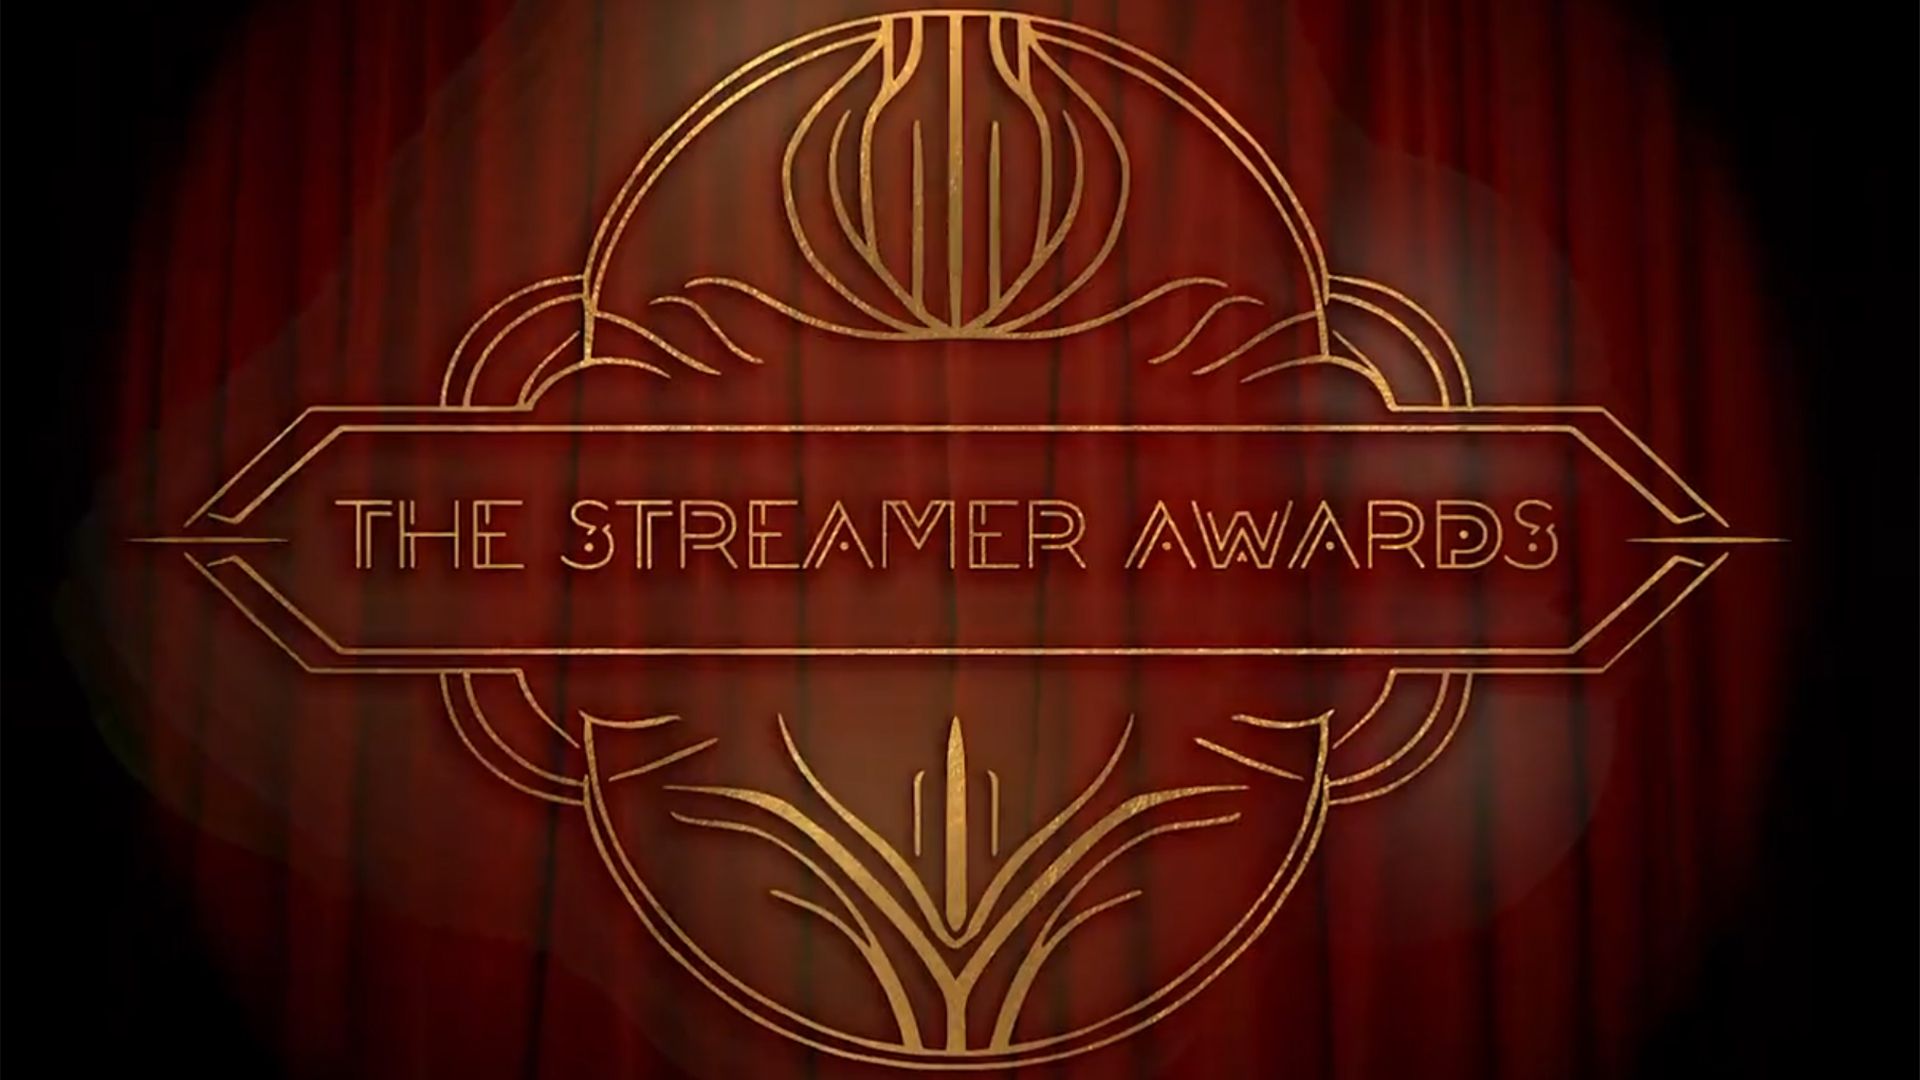 The Streamer Awards.